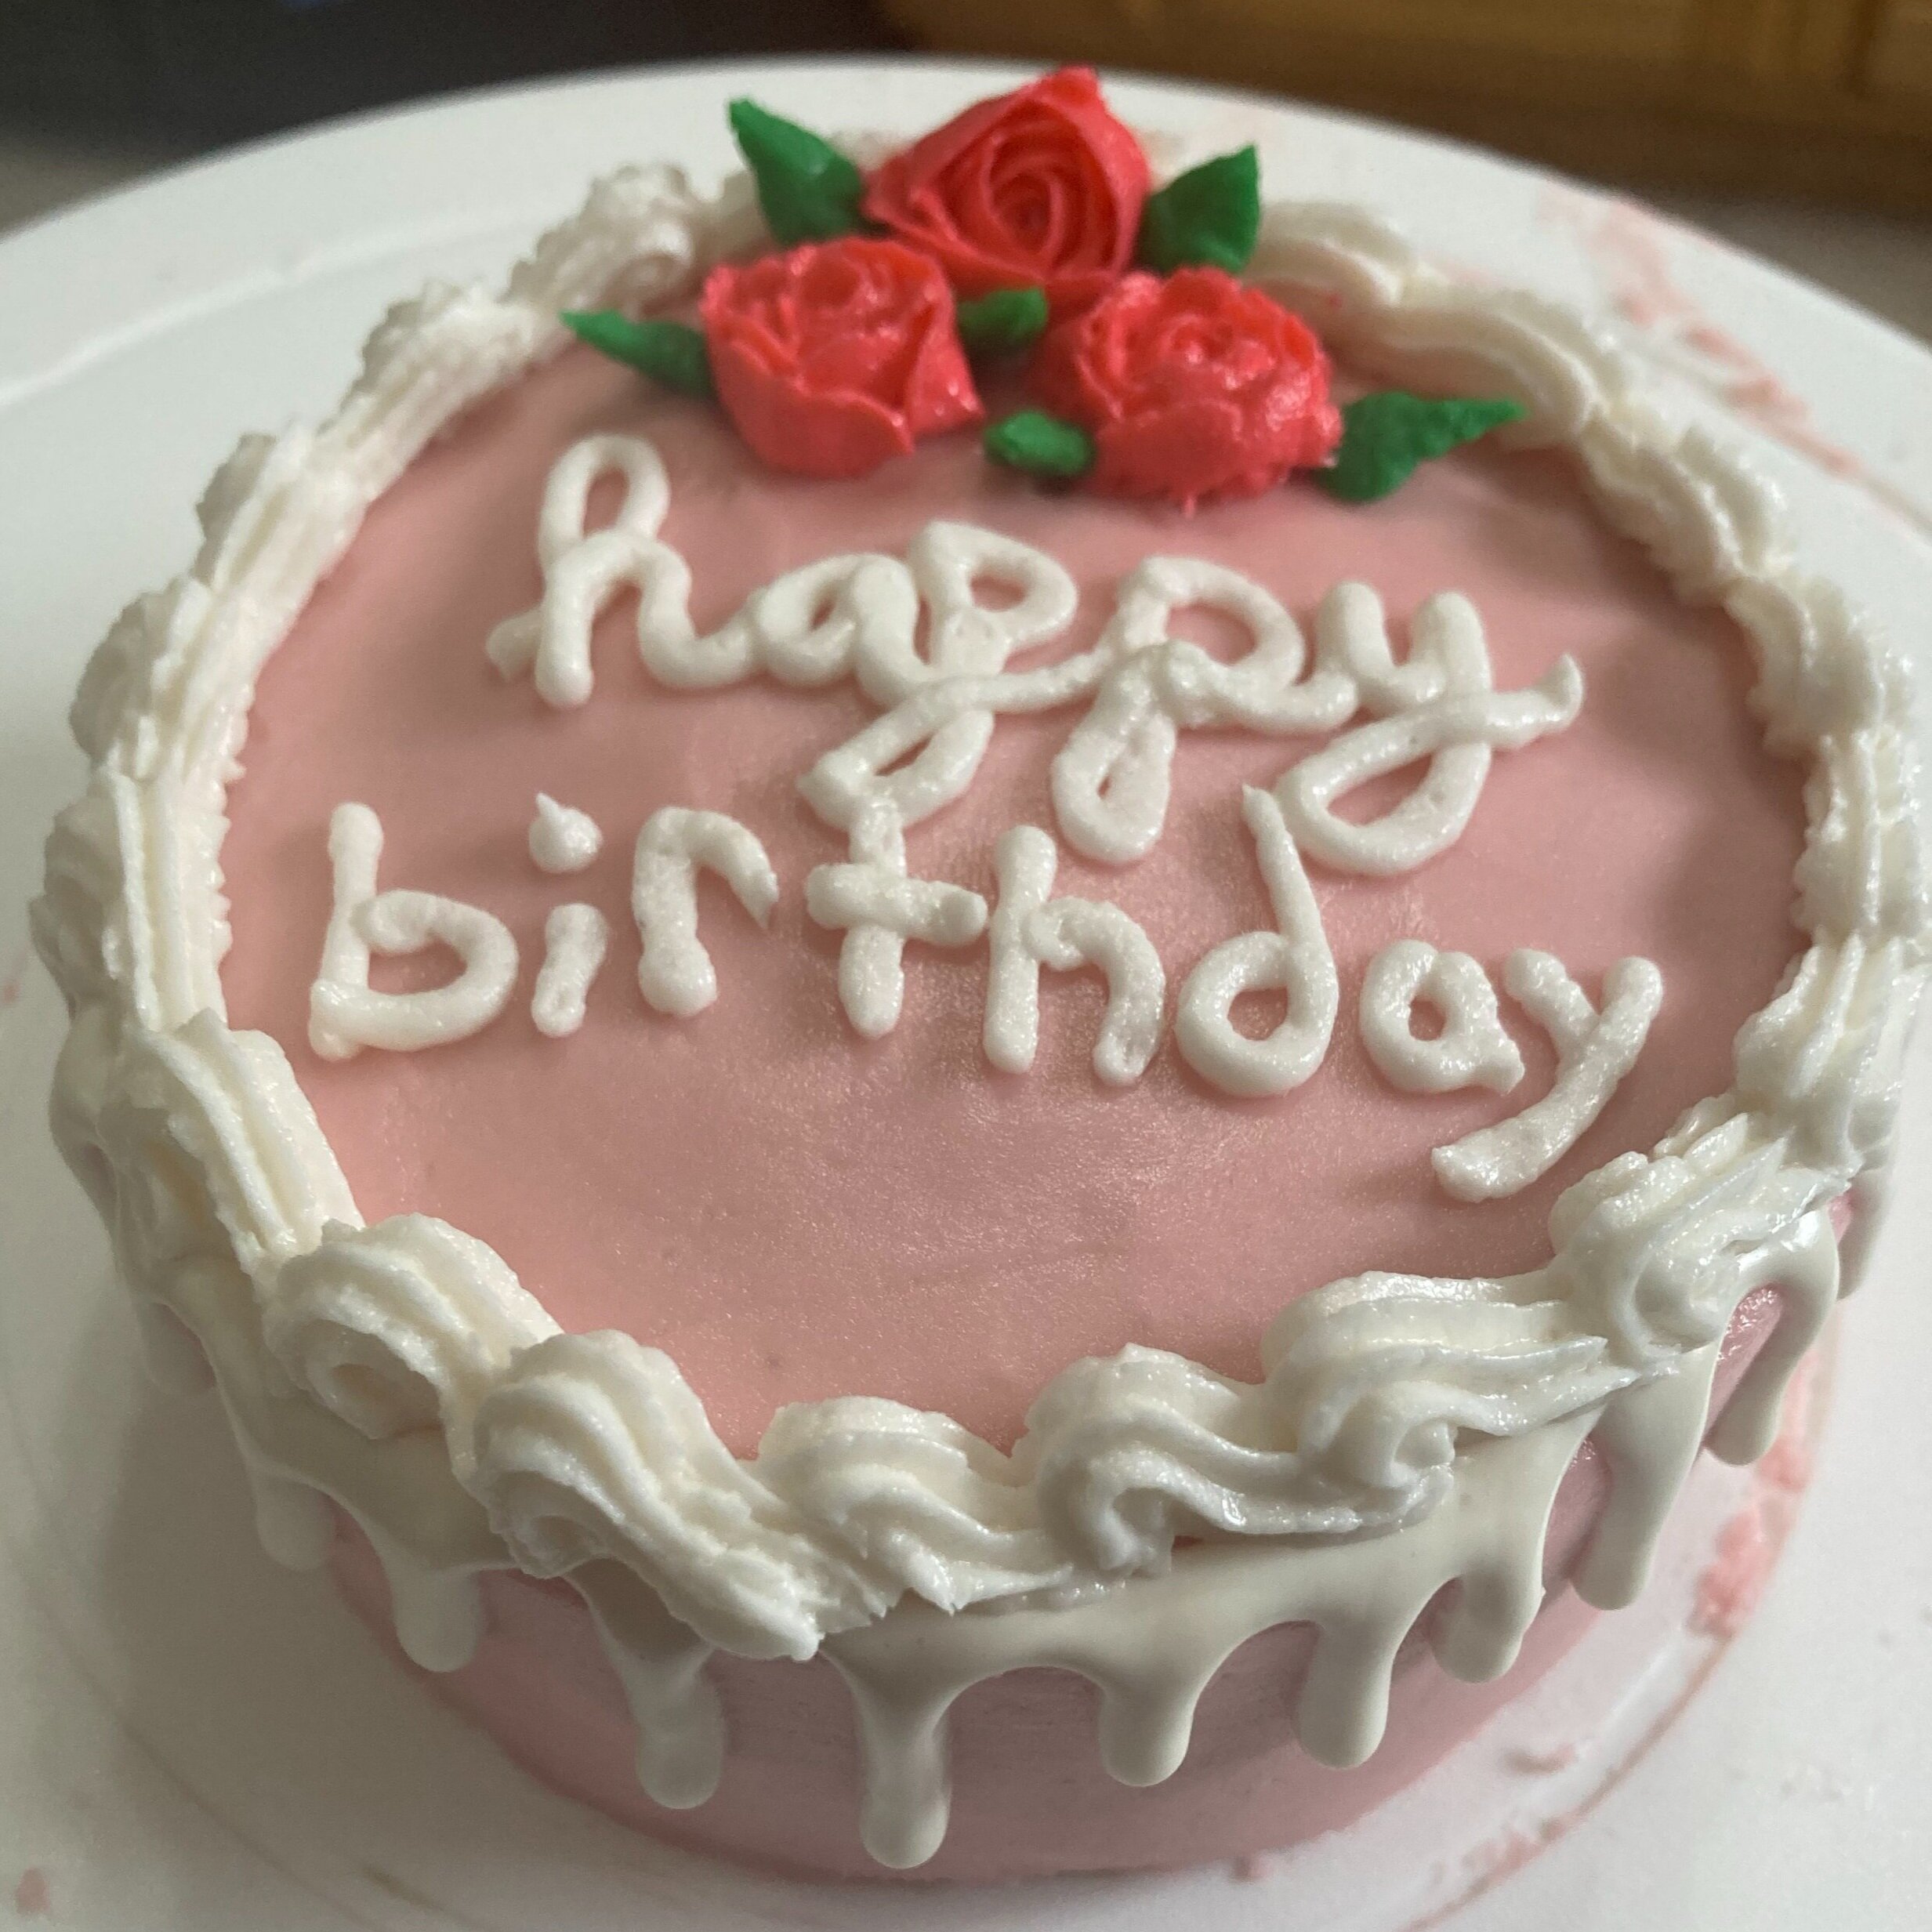 Cakes celebrate milestones for kids in shelters, foster care — Cake4Kids